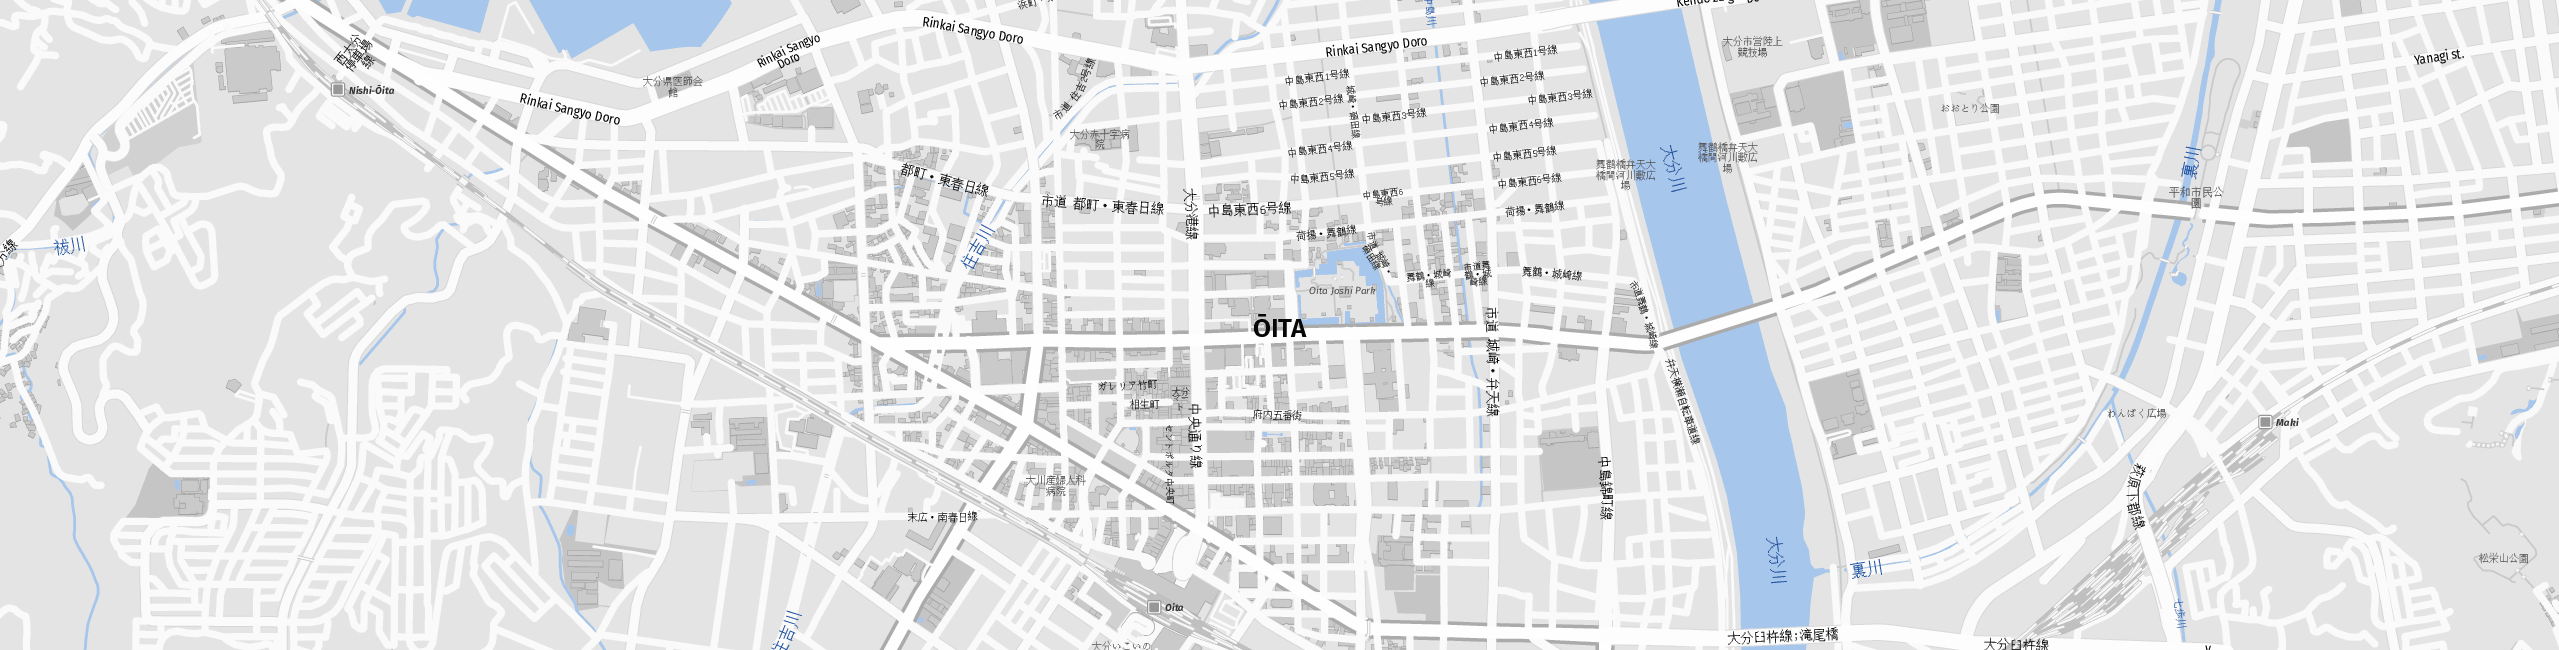 Stadtplan Ōita zum Downloaden.